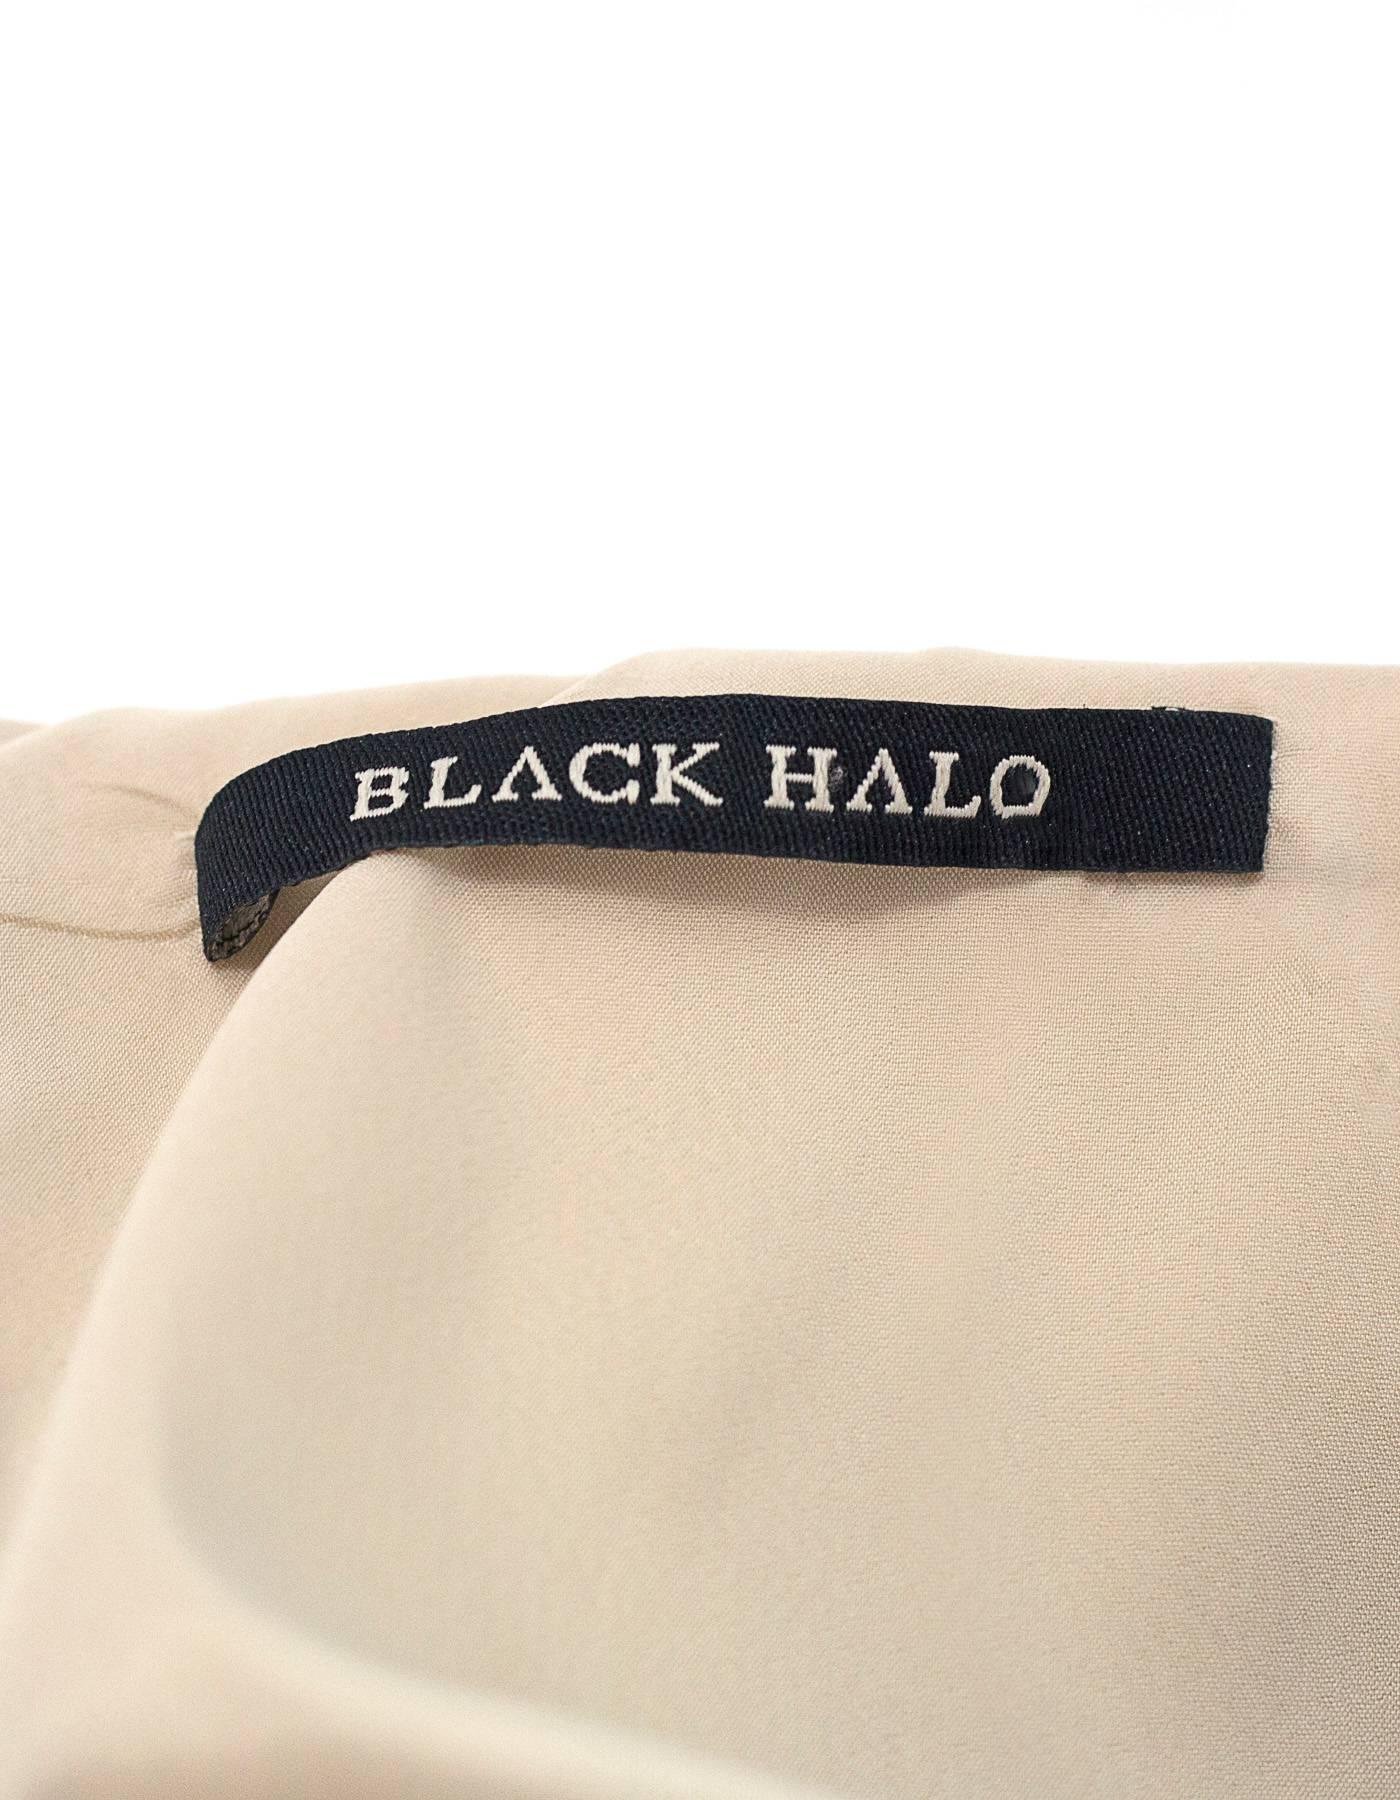 Women's Black Halo Beige Floral Print Sleeveless Dress sz US2